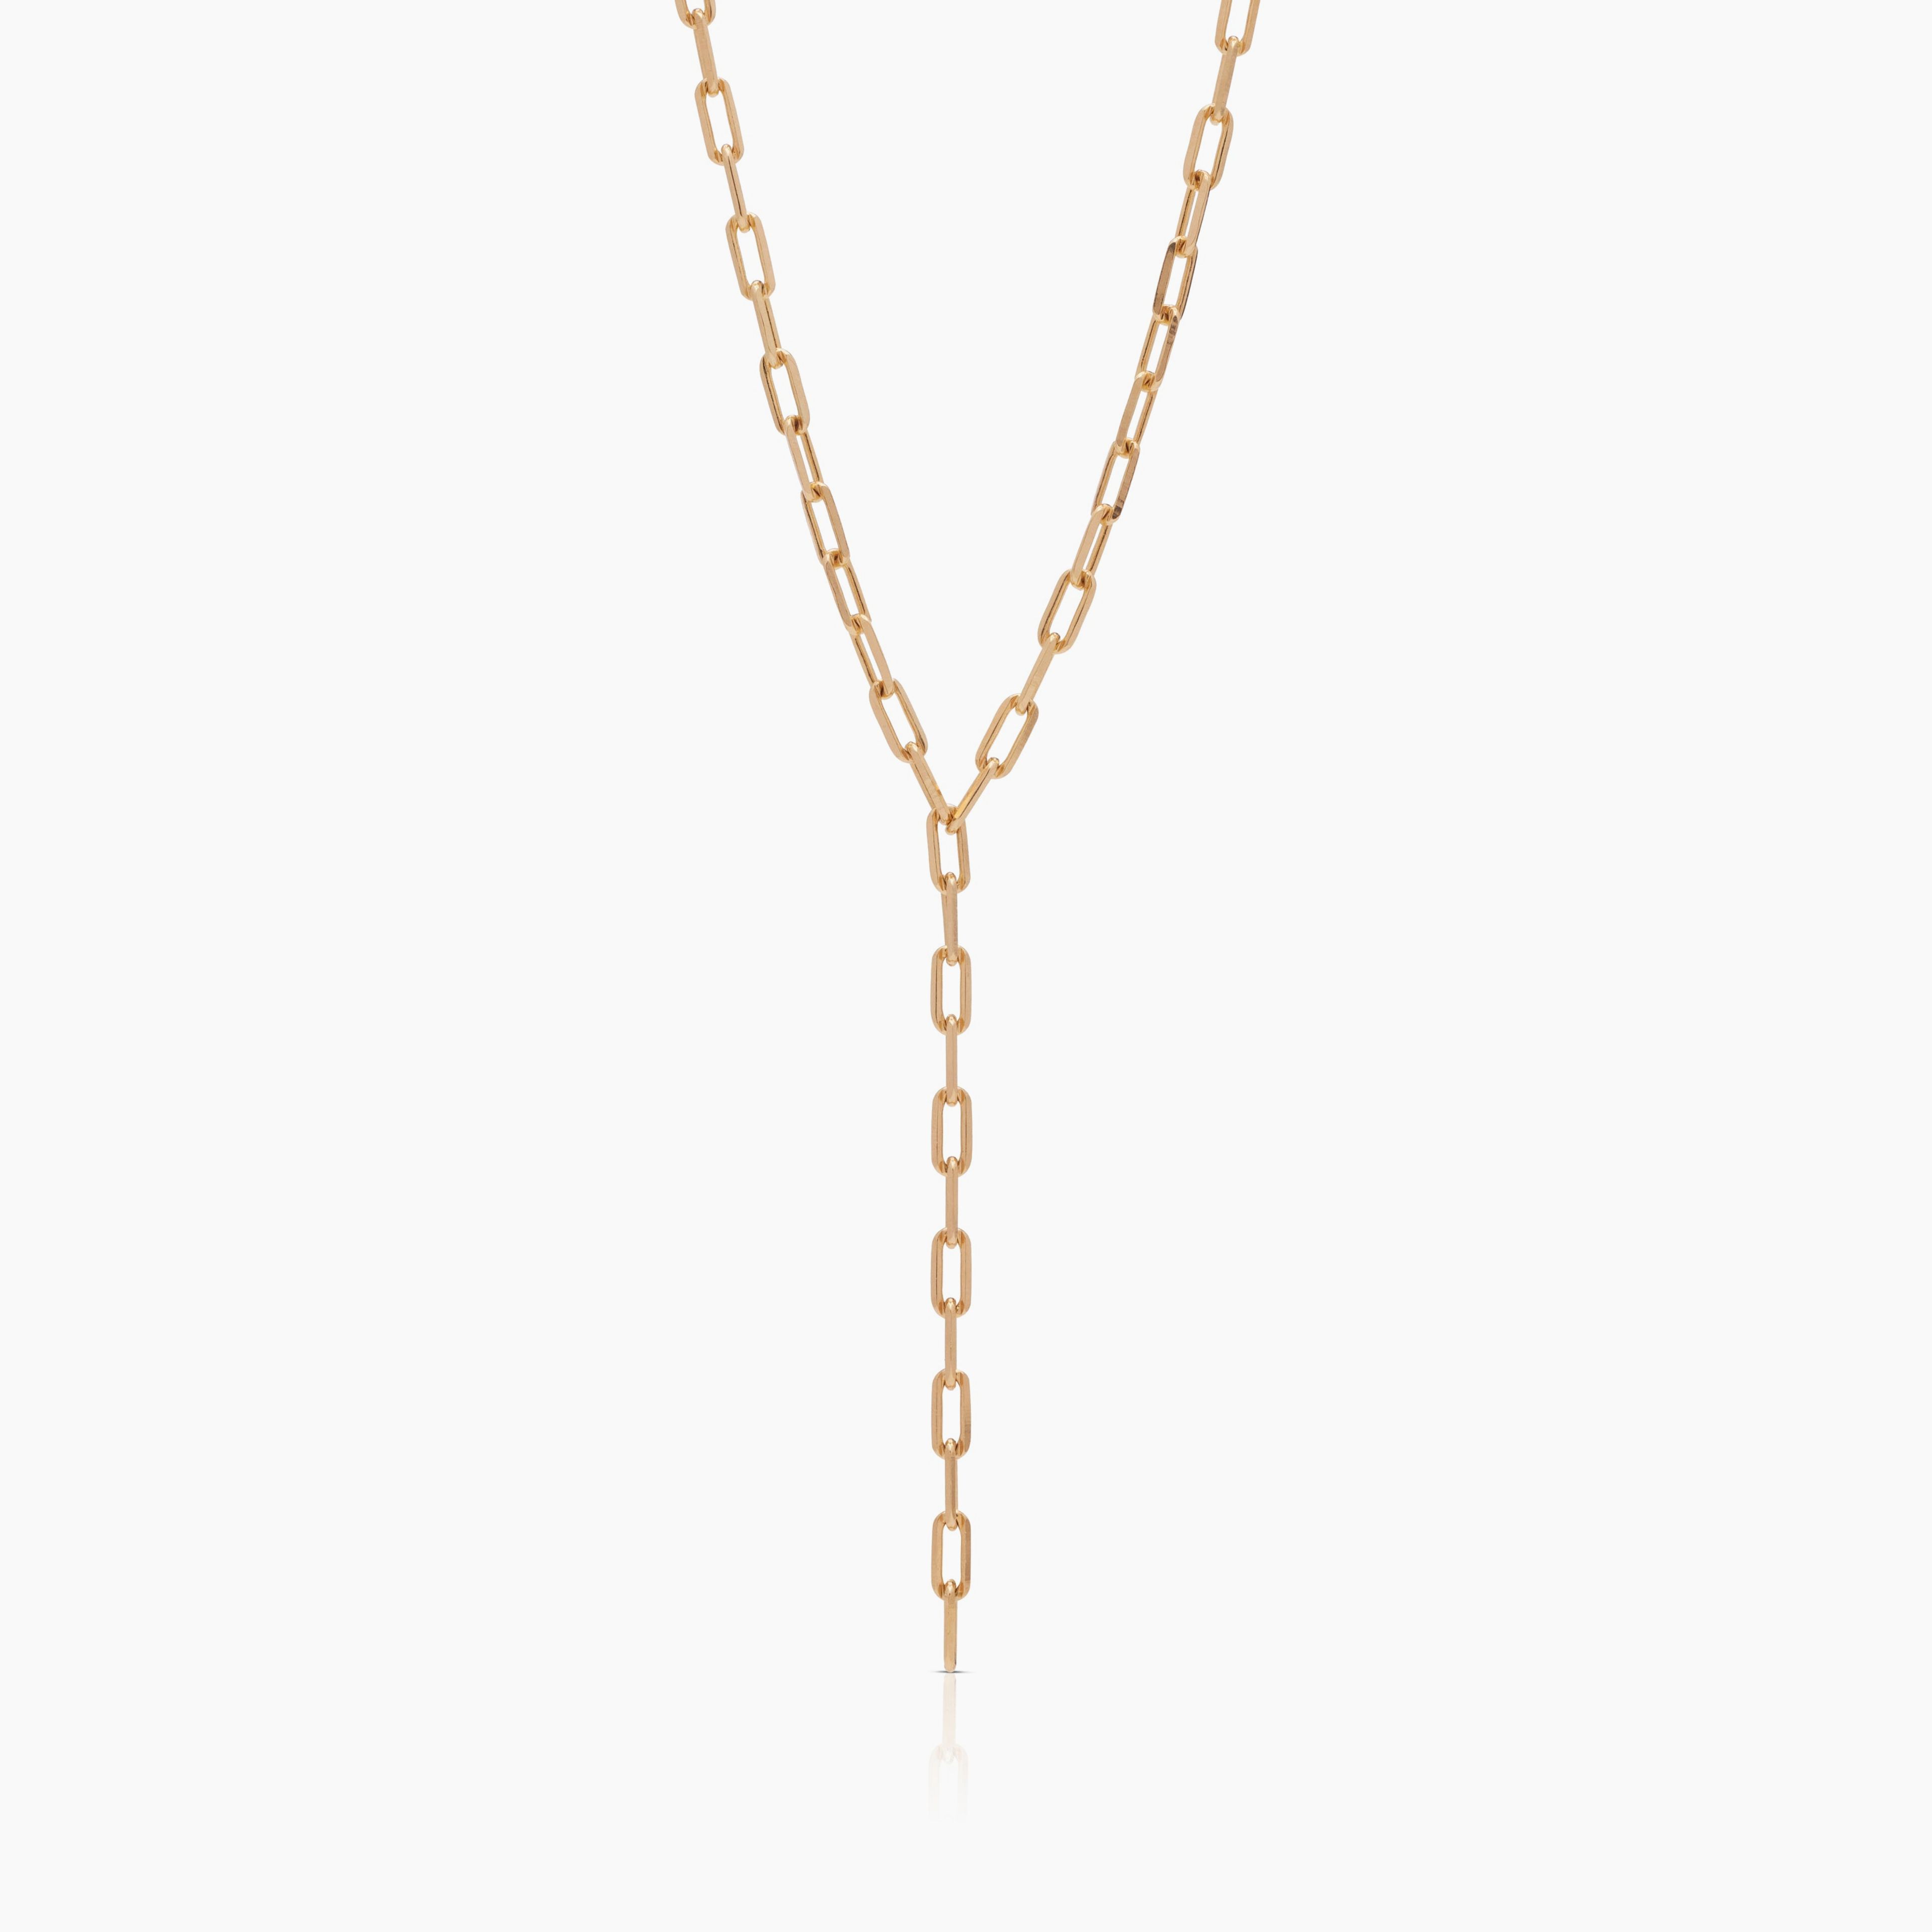 Chainette Lariat Necklace